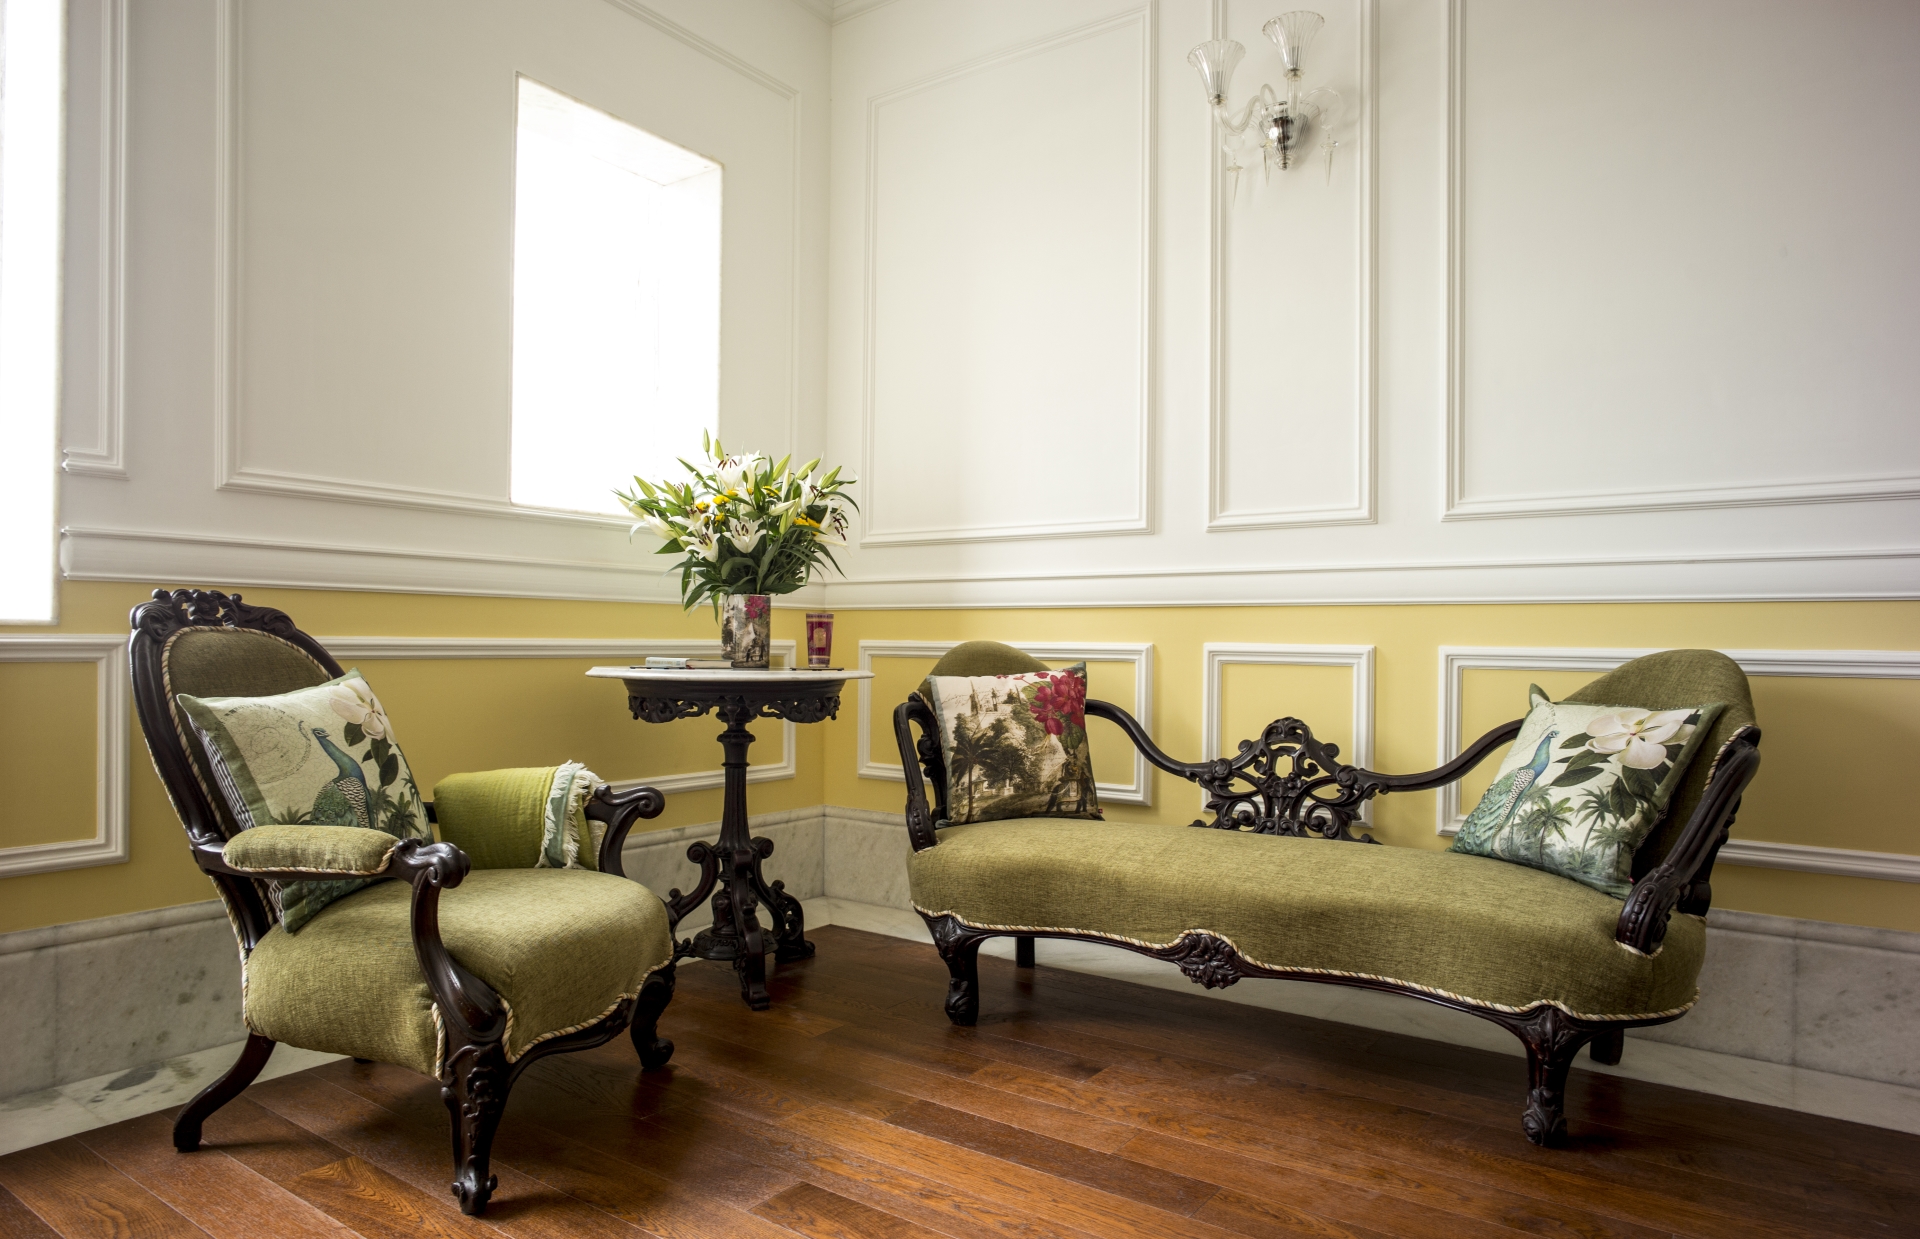 Beautiful Interiors - The Glenburn Penthouse